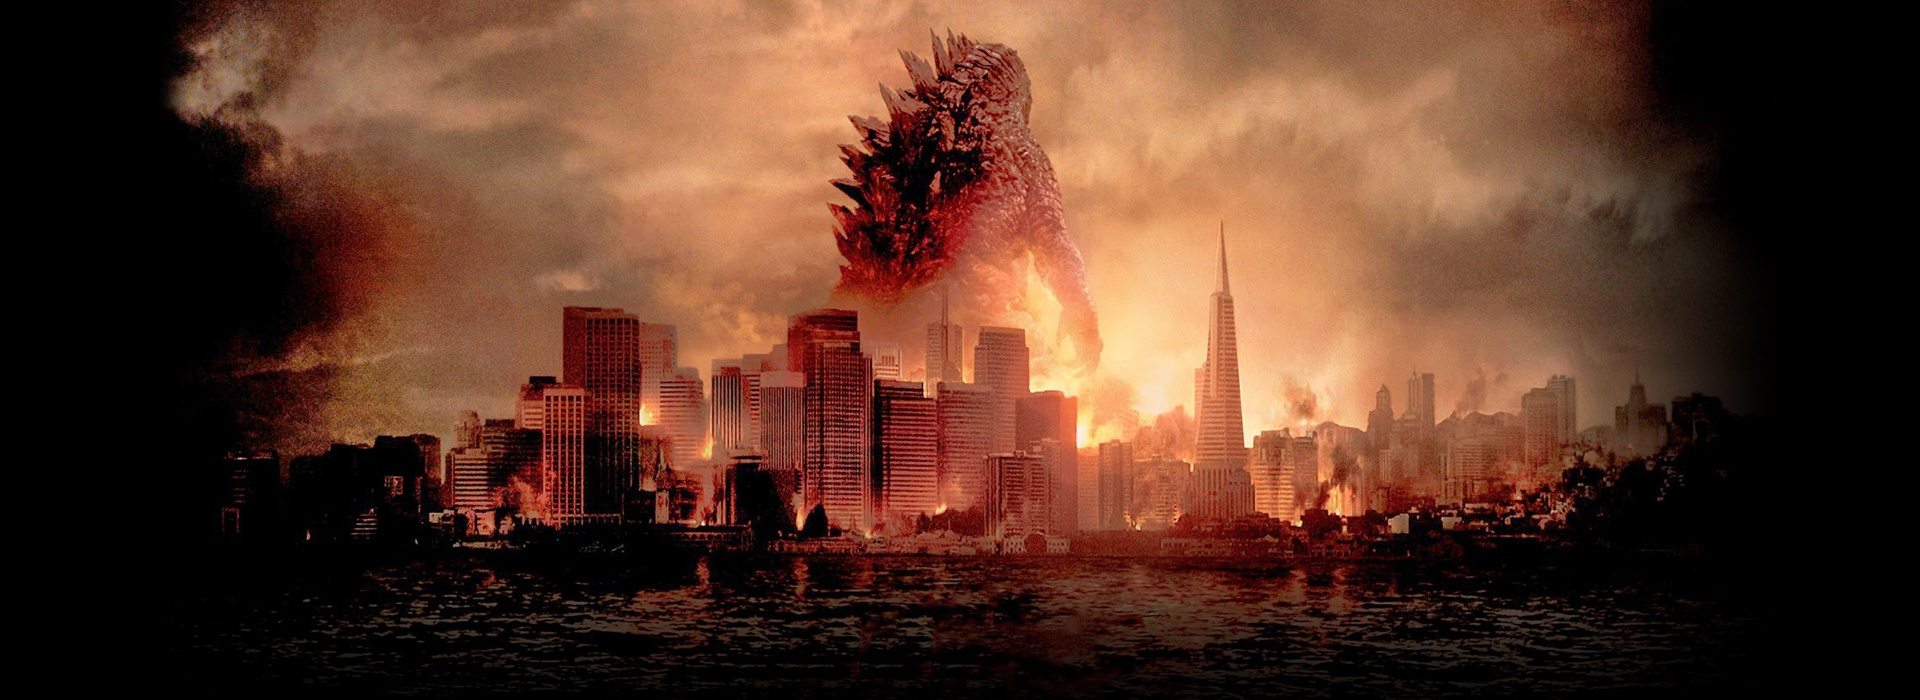 Movie poster Godzilla